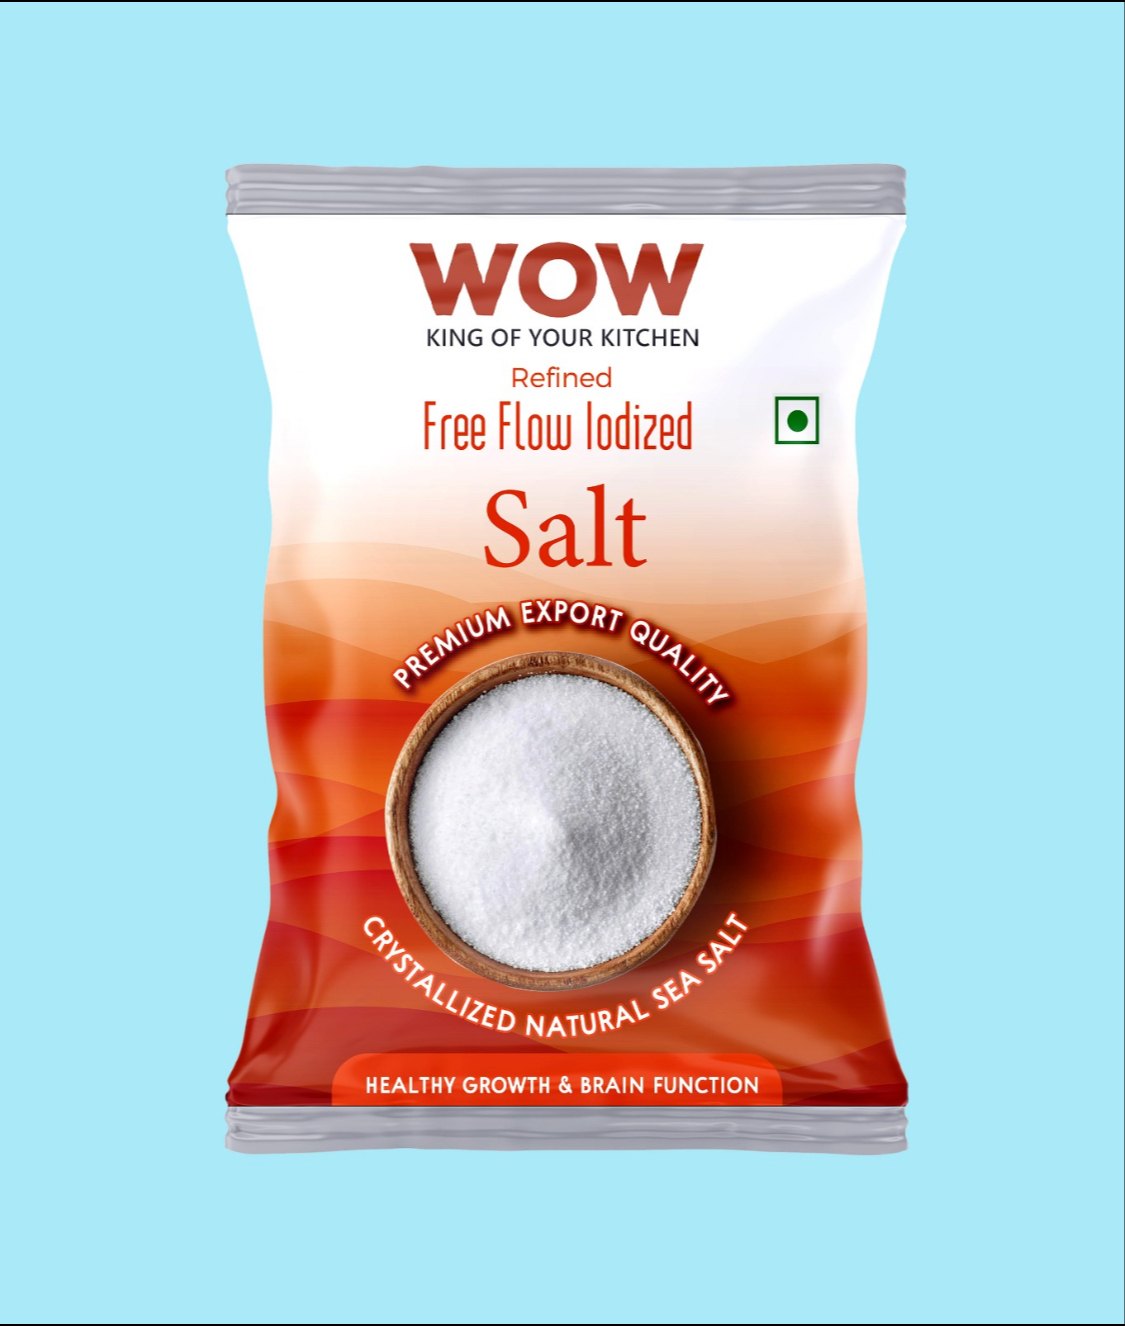 refined salt wow